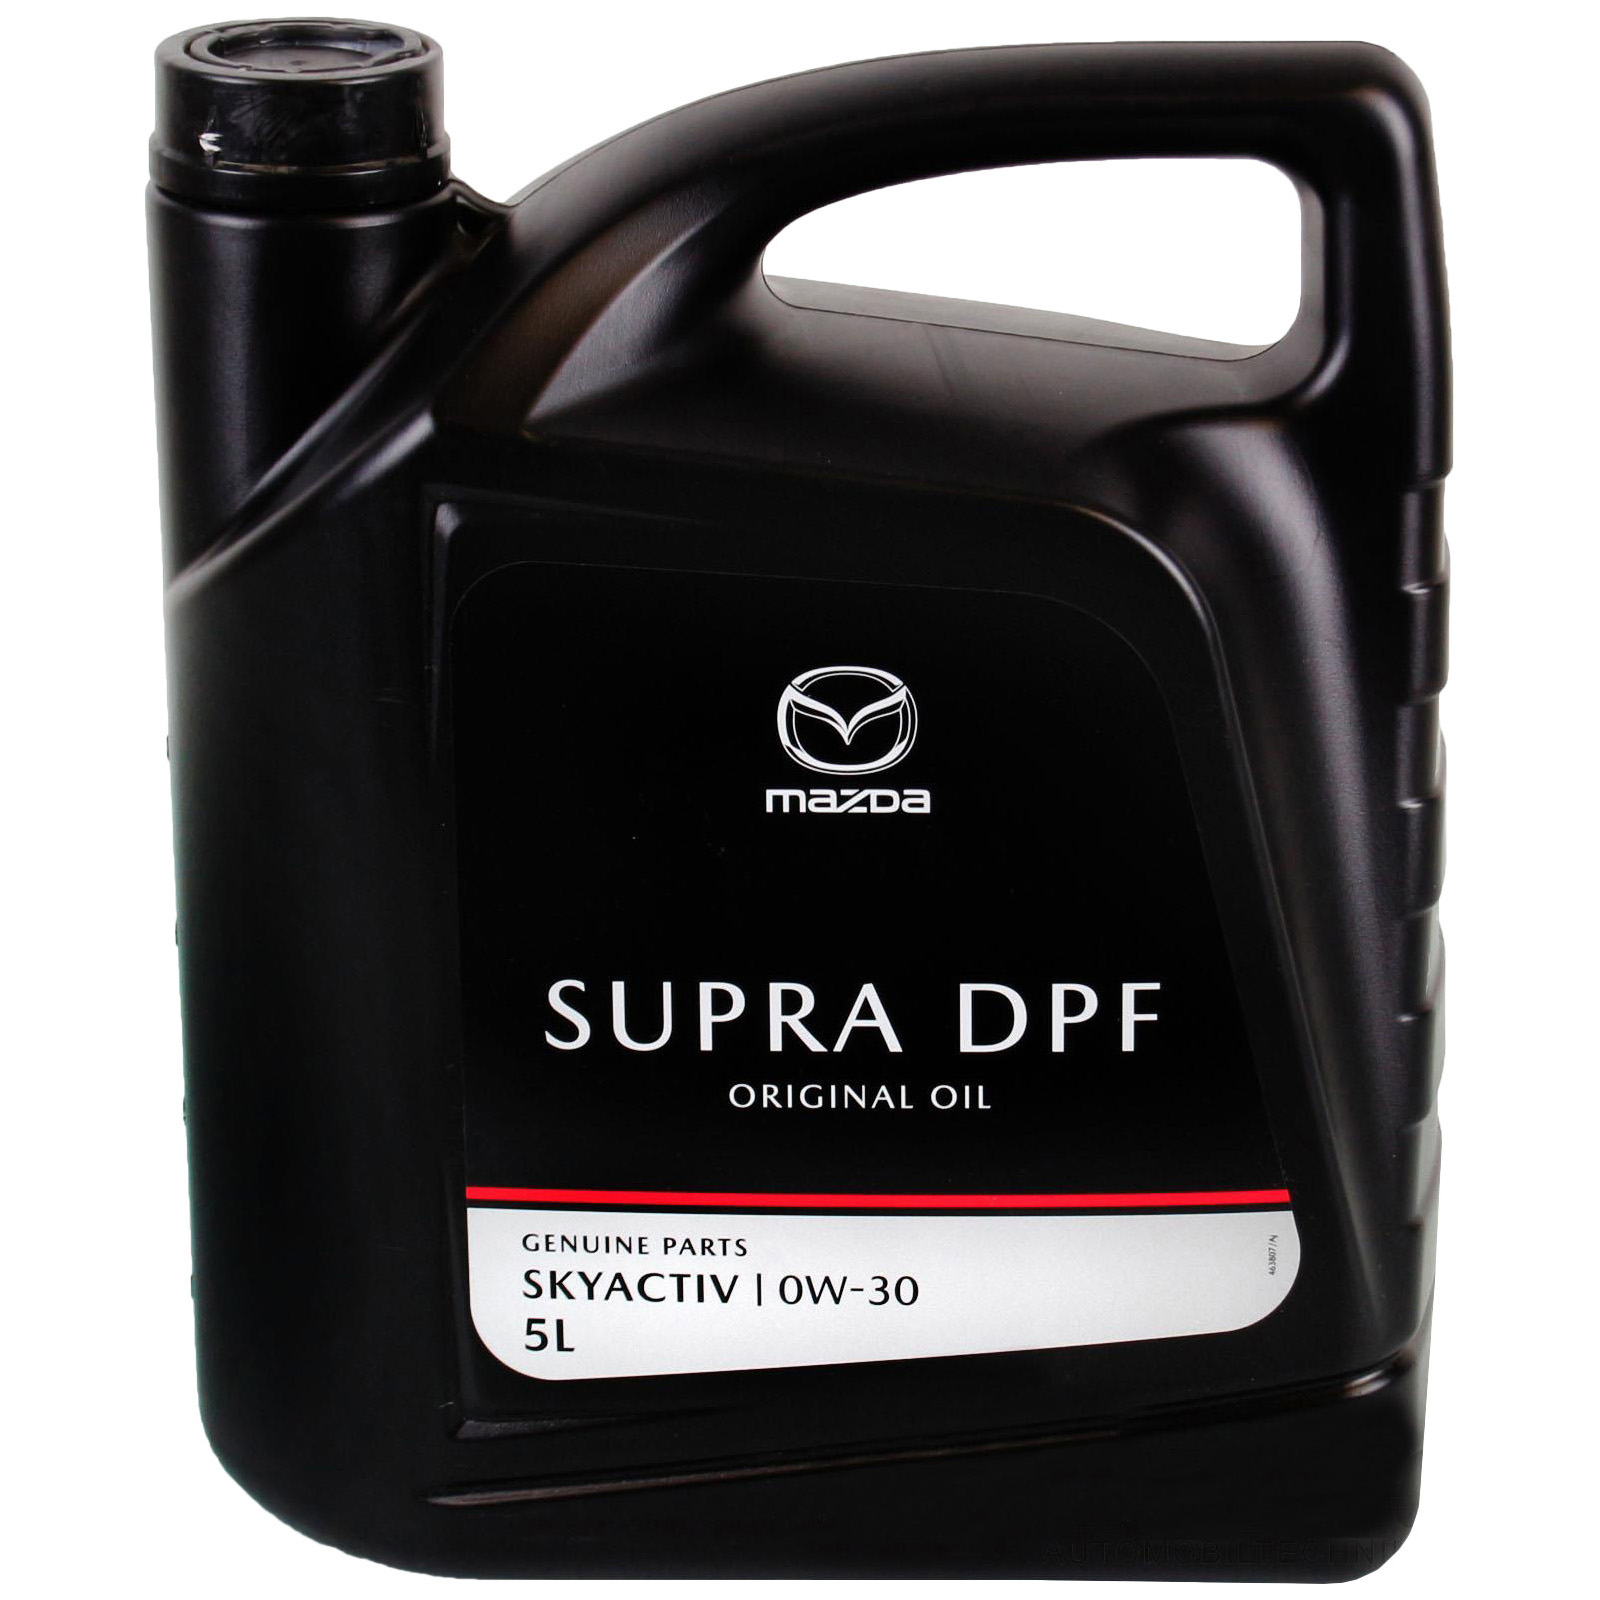 фото Моторное масло mazda синт 5л - 0w30 original oil supra dpf